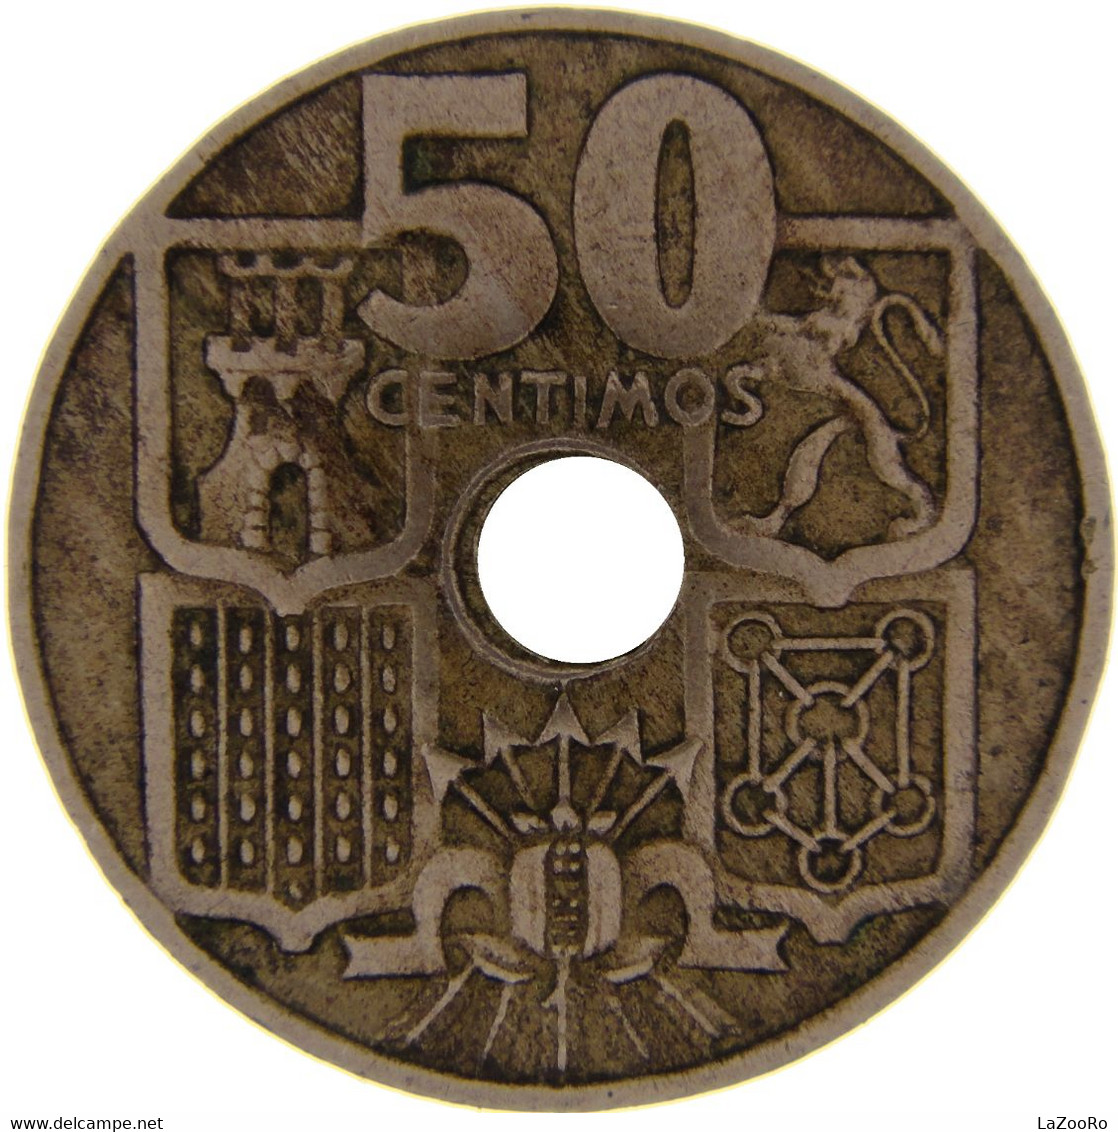 LaZooRo: Spain 50 Centimos 1951 XF / UNC - 50 Céntimos